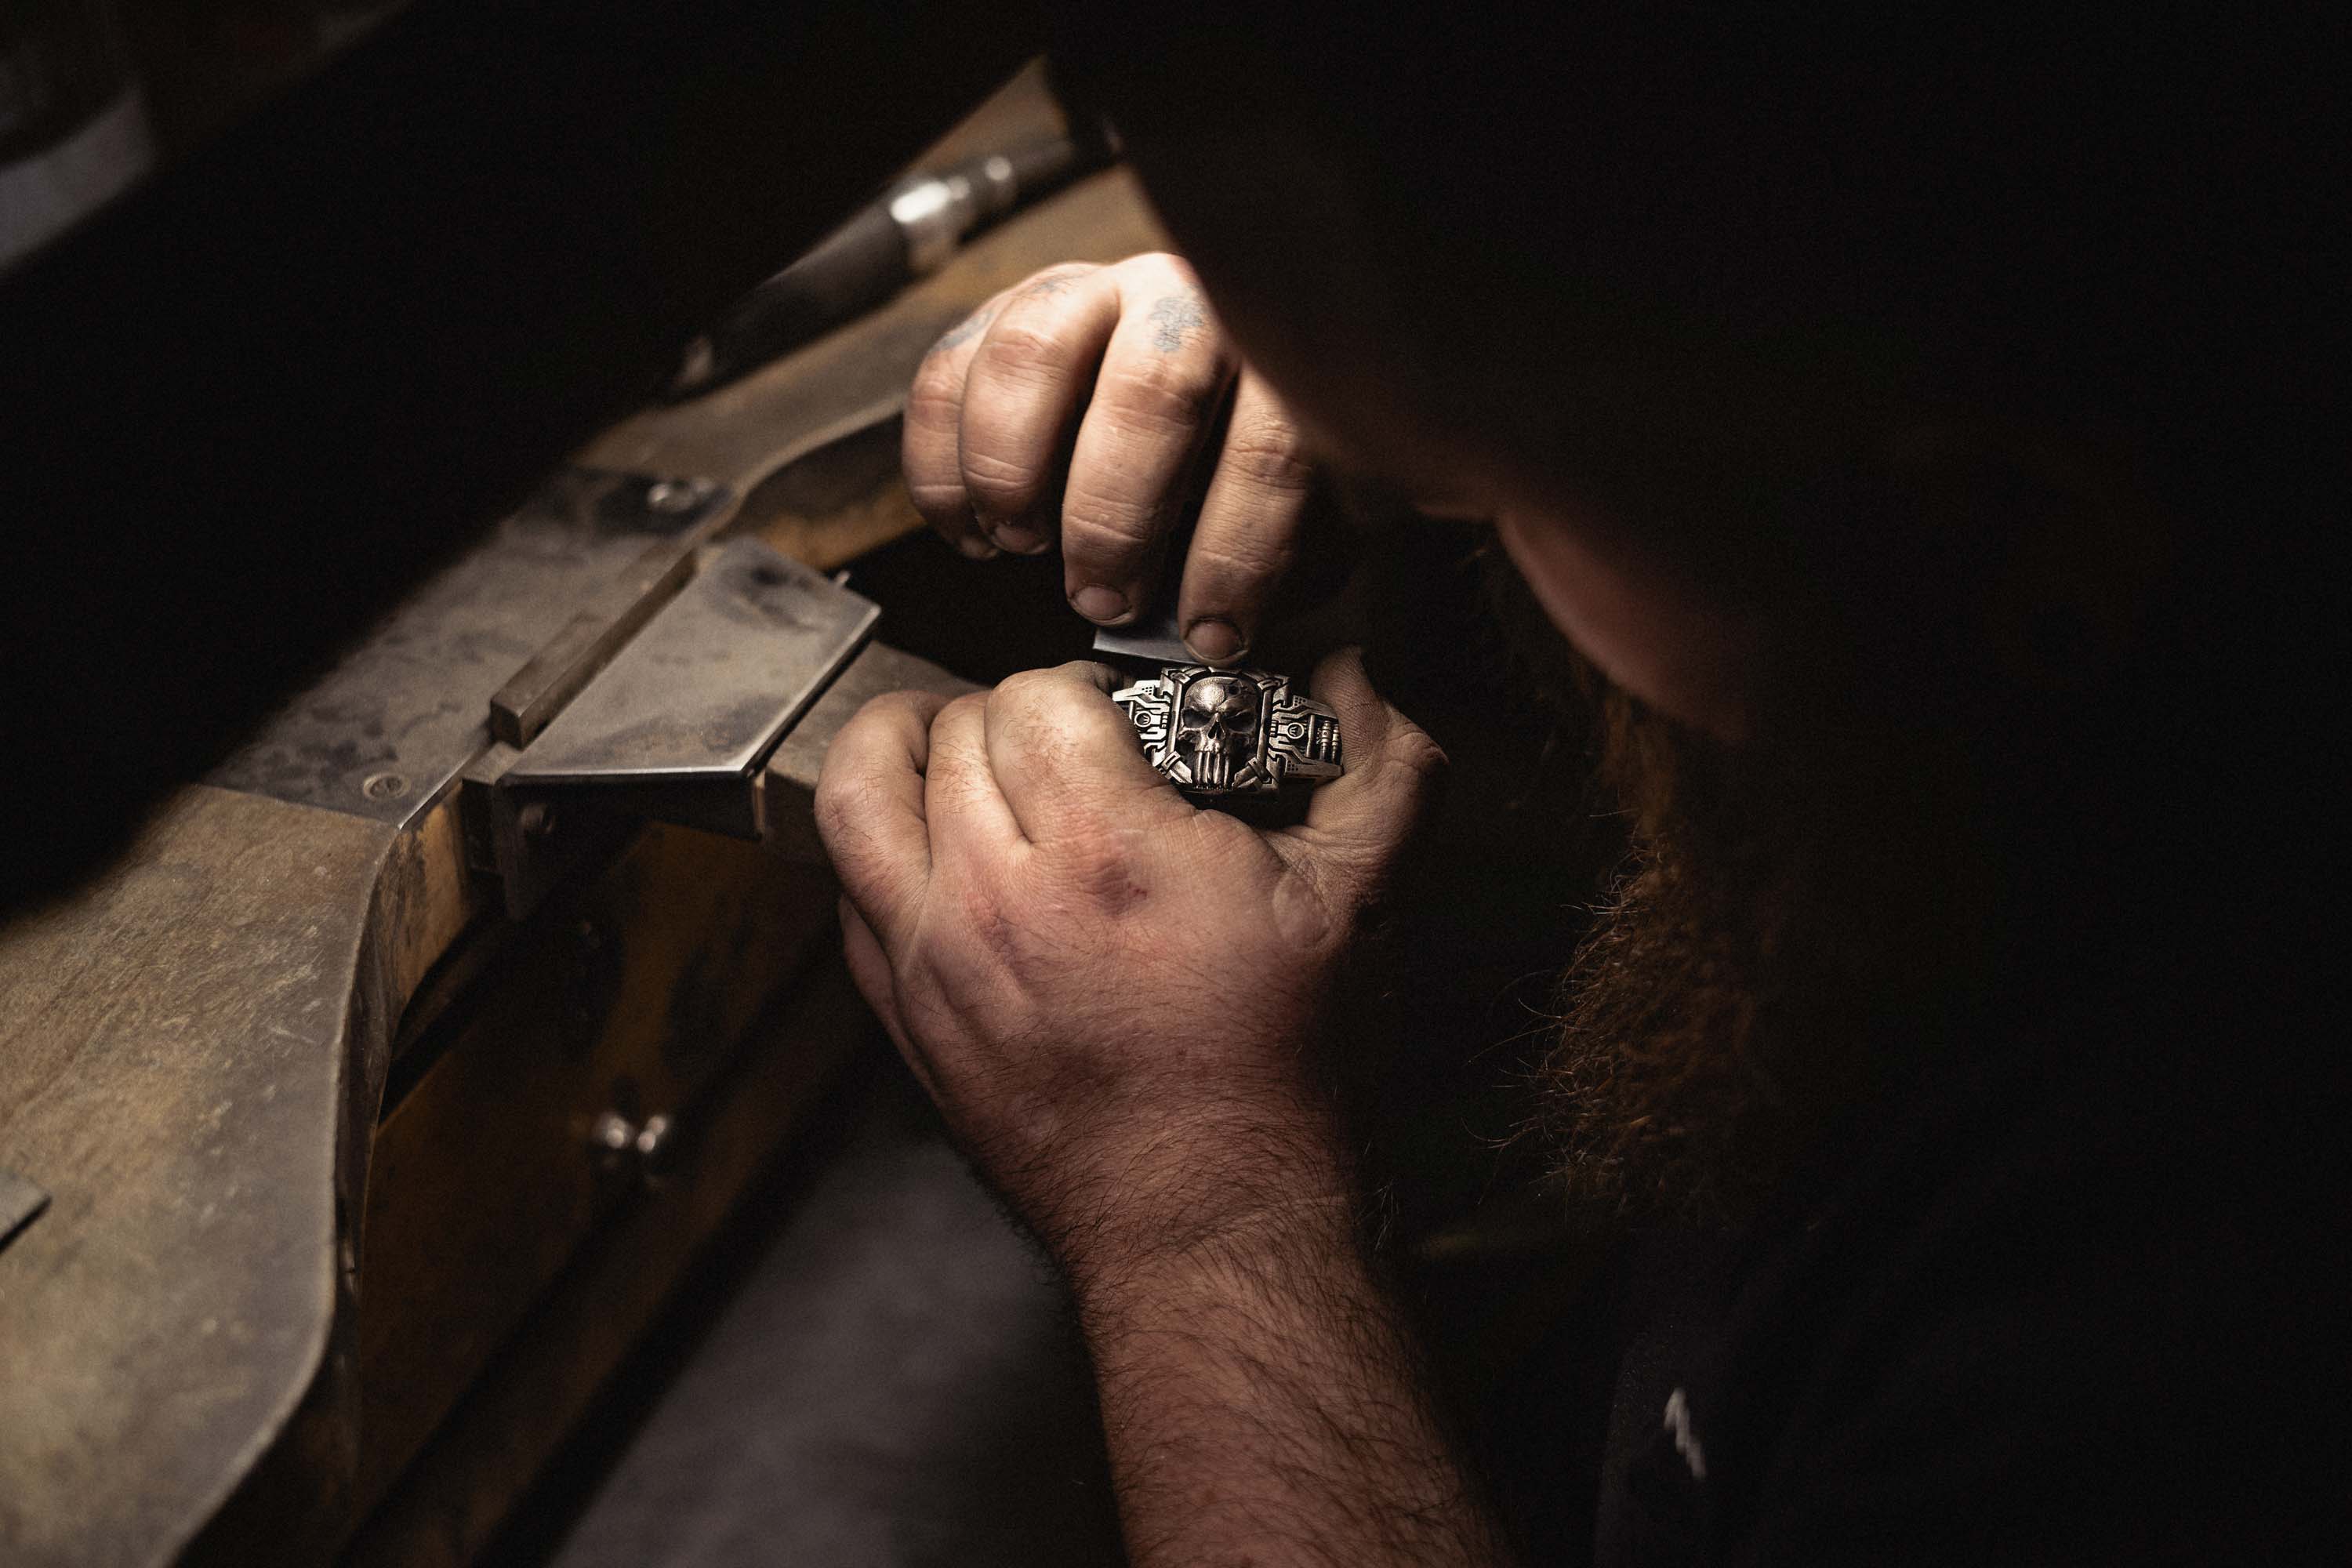 A NightRider Master Jeweler works on the details of a Sheepdog Interlock Bracelet